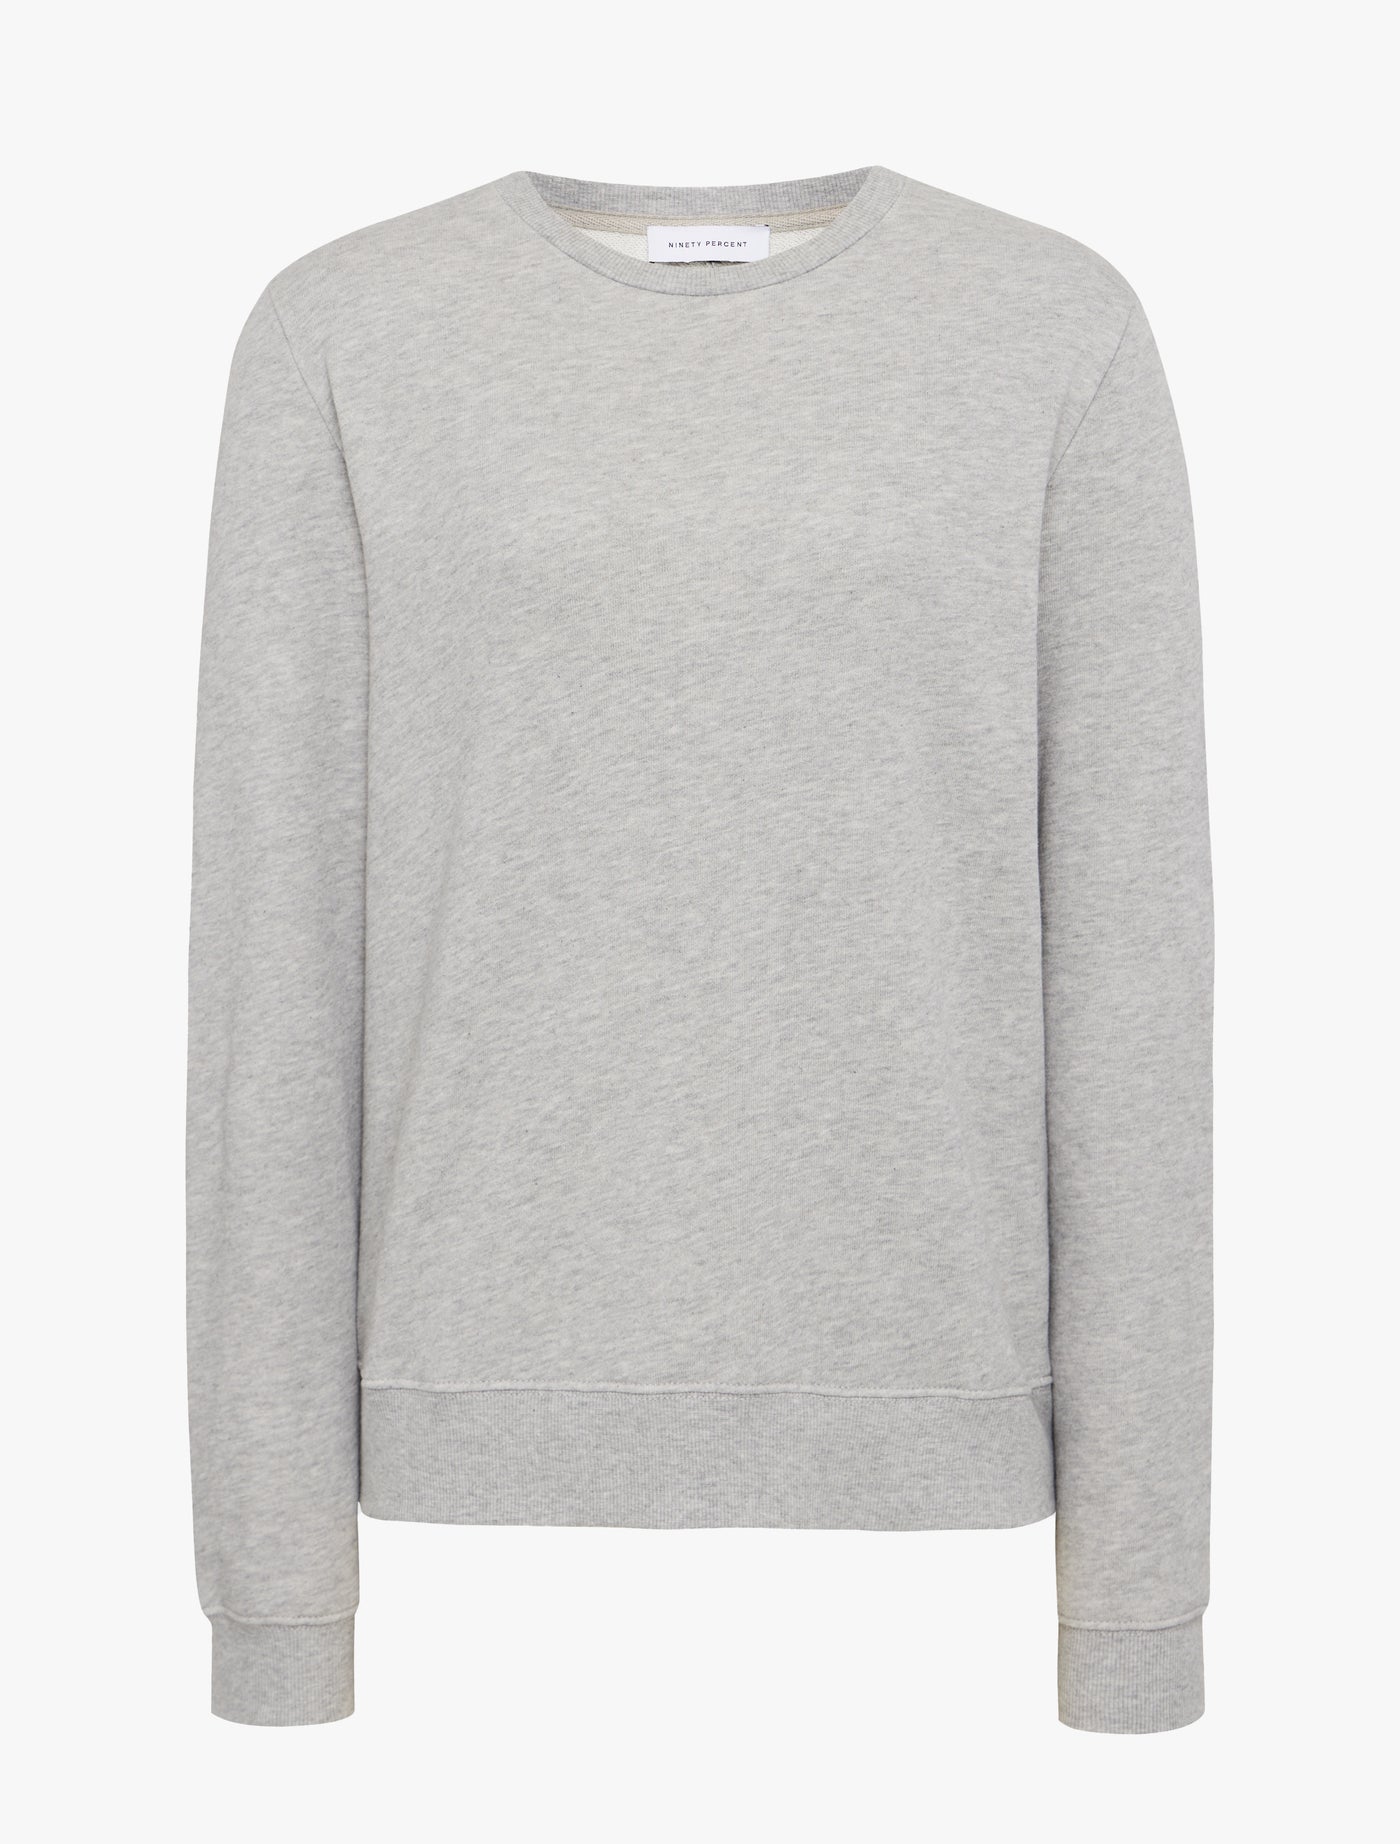 Kendall Classic Sweatshirt in Grey Marl